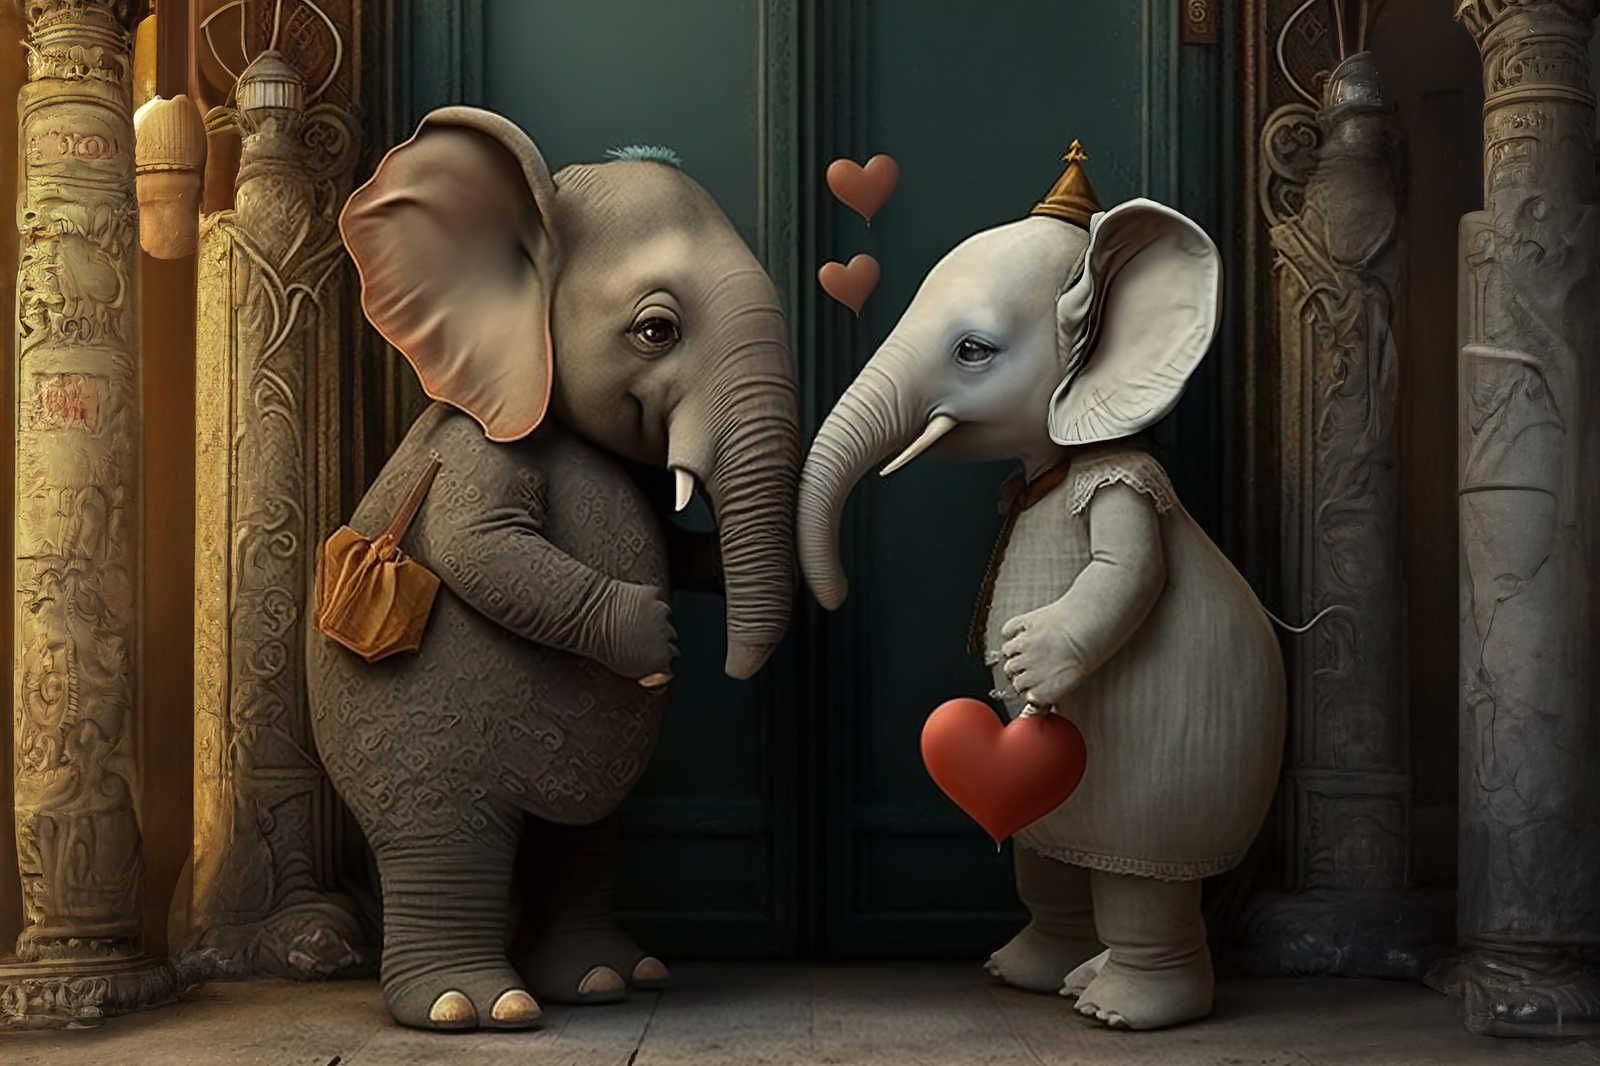             KI-Leinwandbild »elephant love« – 90 cm x 60 cm
        